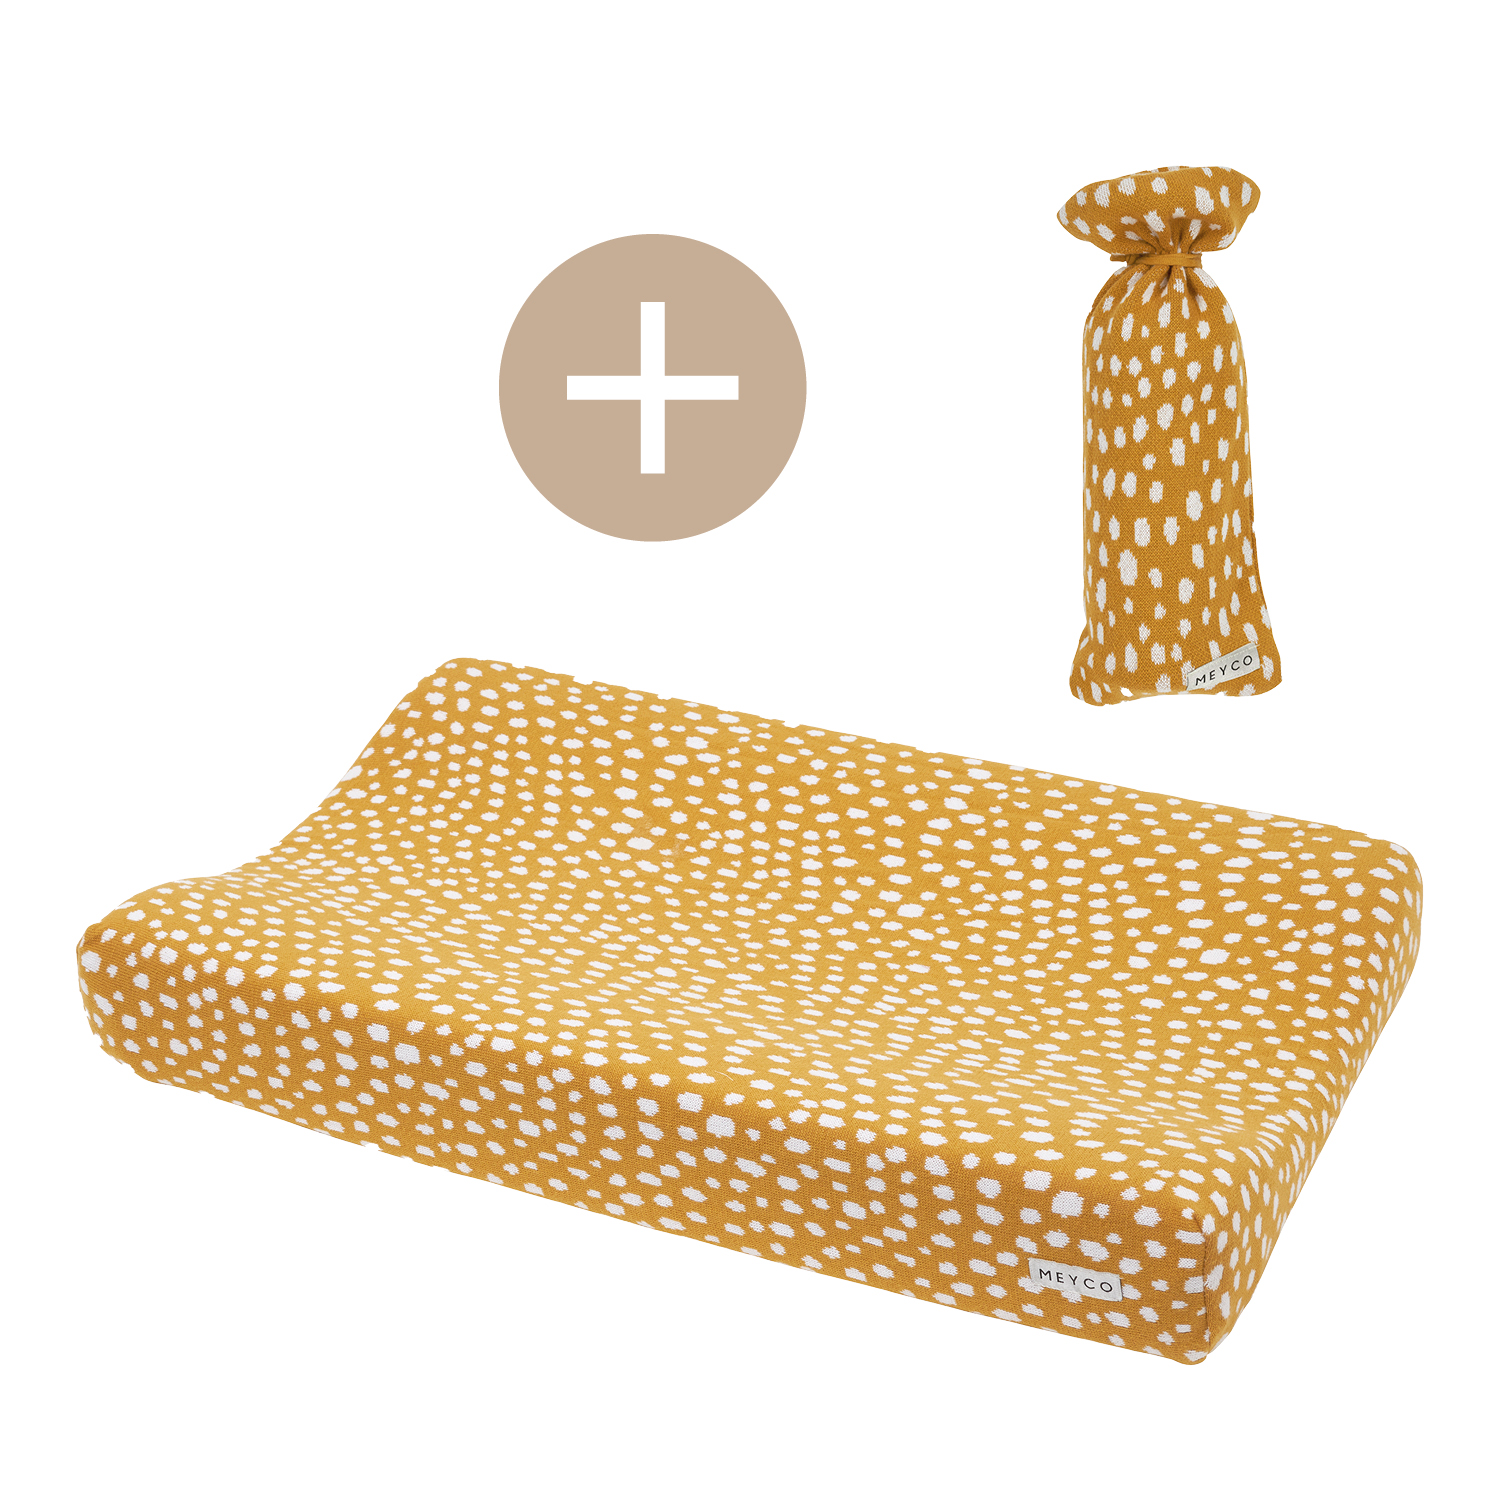 Wickelauflagenbezug + Wärmflaschenbezug Cheetah - honey gold - 50x70cm